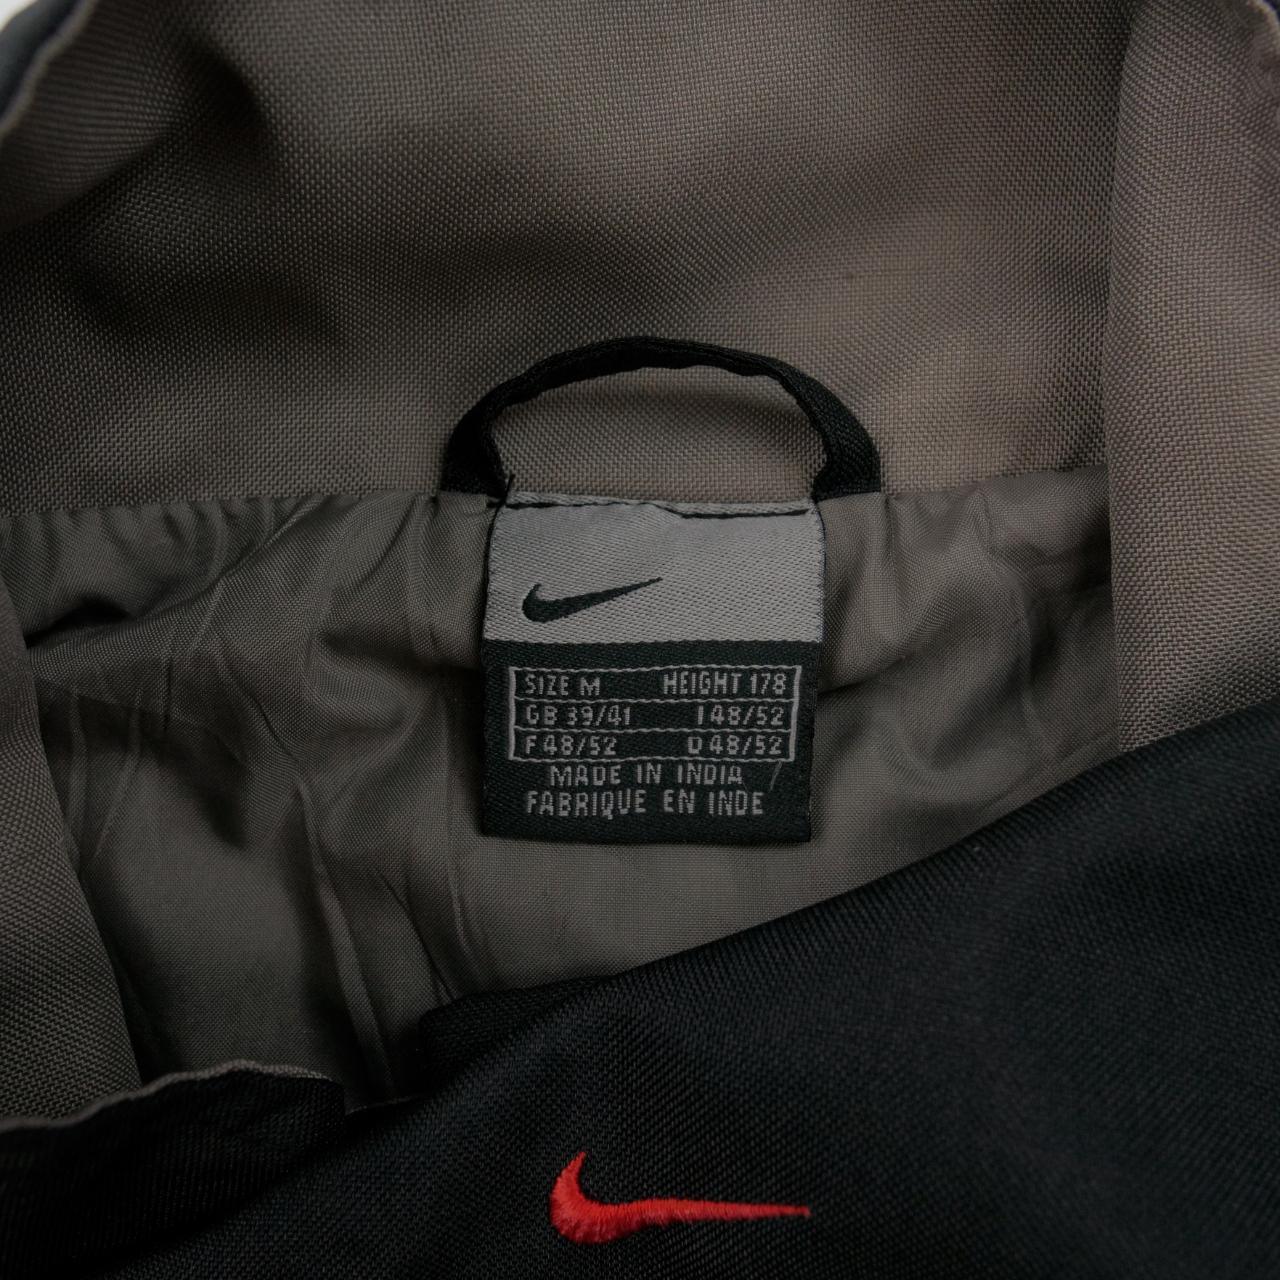 Vintage Nike Uptempo Jacket Size M - Known Source